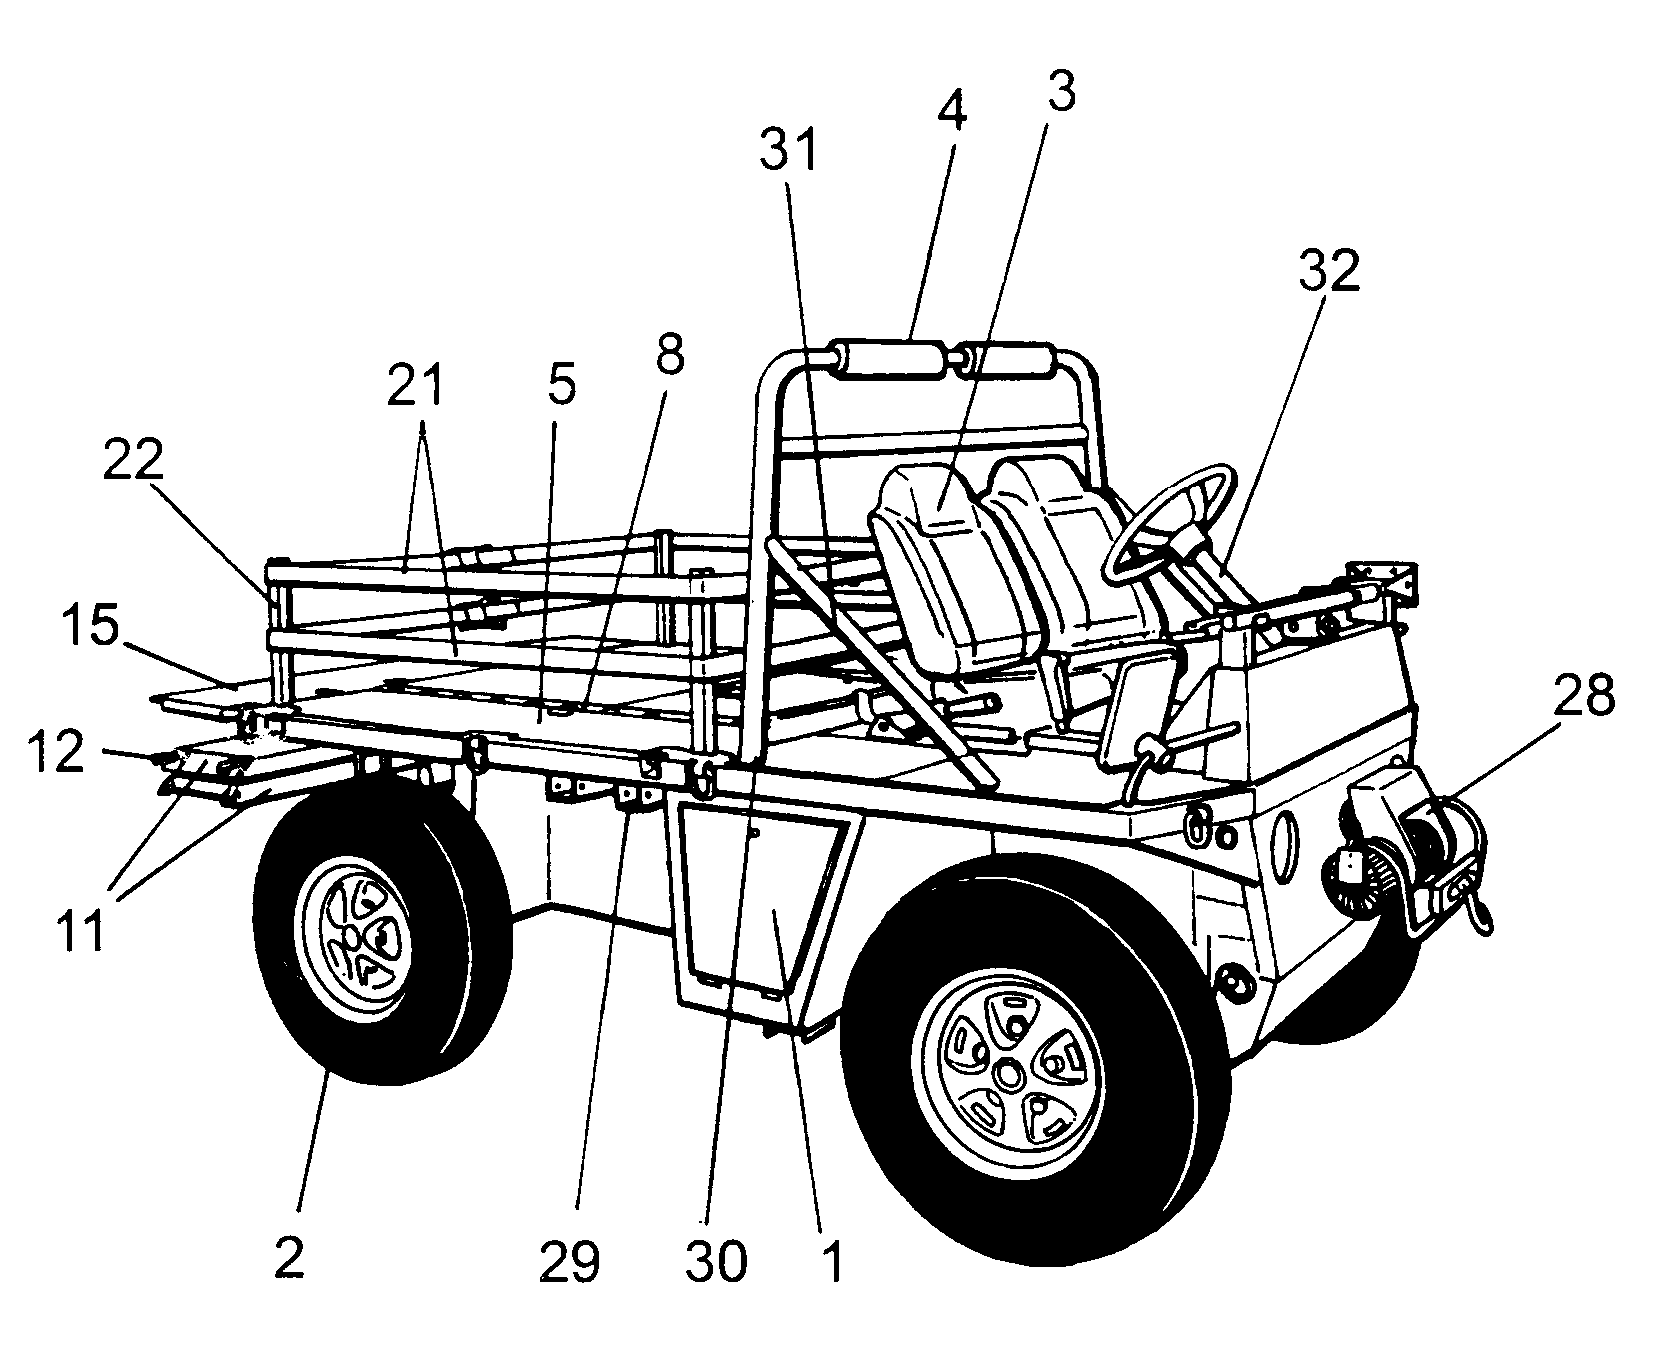 Multipurpose all-terrain vehicle launchable by parachute